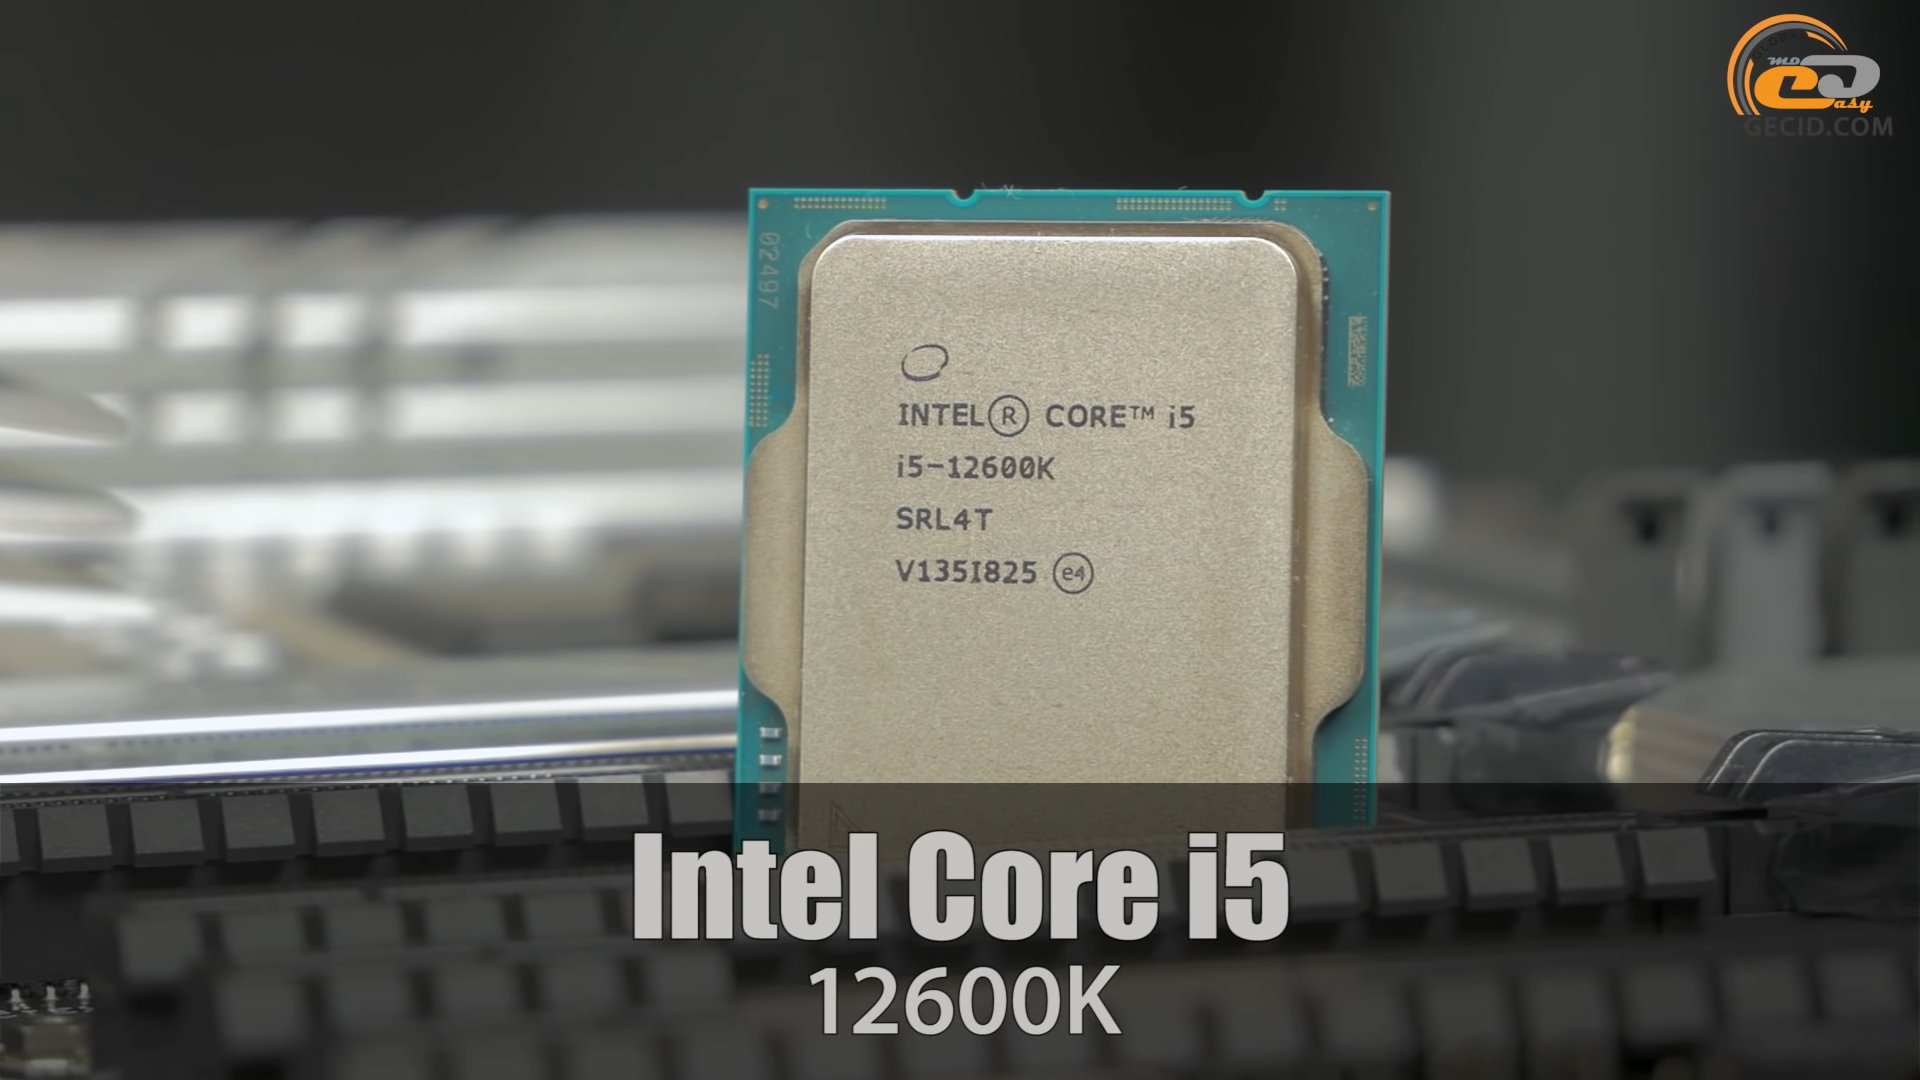 12600kf характеристики. Intel Core i5 12600k. Процессор Intel Core i5-12600k OEM. Intel Core i7 12700k. Процессор Intel Core i7 12700k.